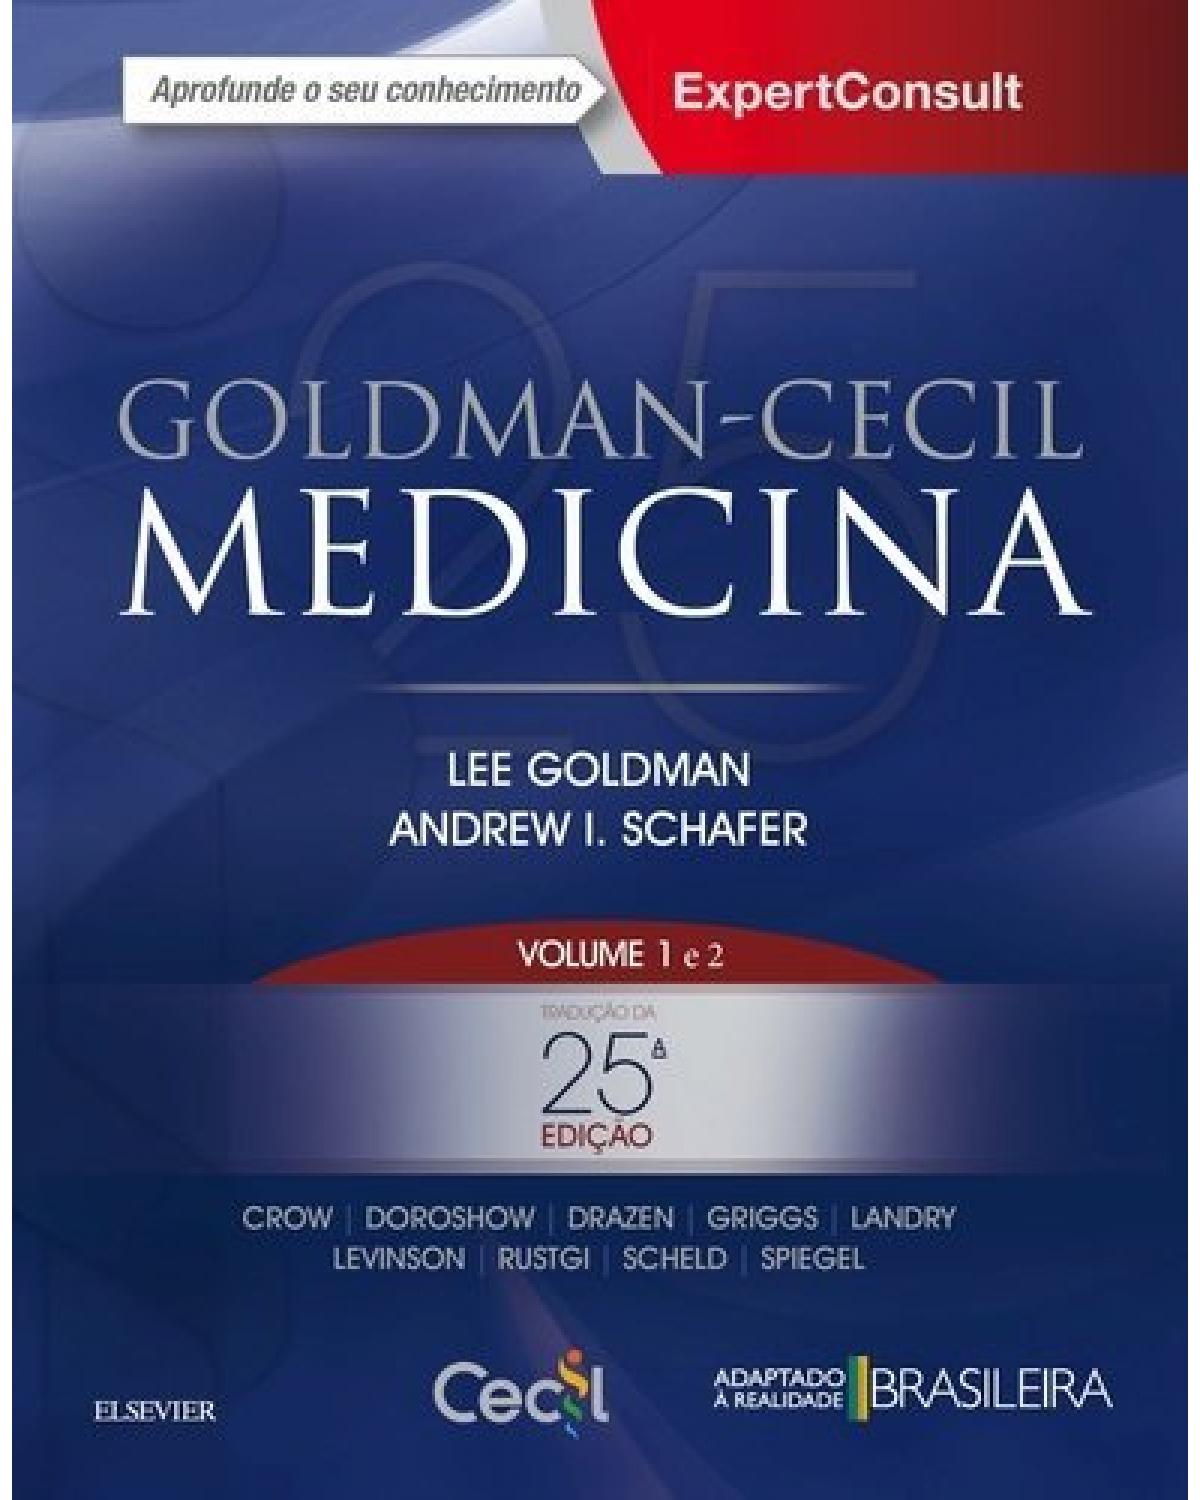 Goldman-Cecil - Medicina - 25ª Edição | 2018